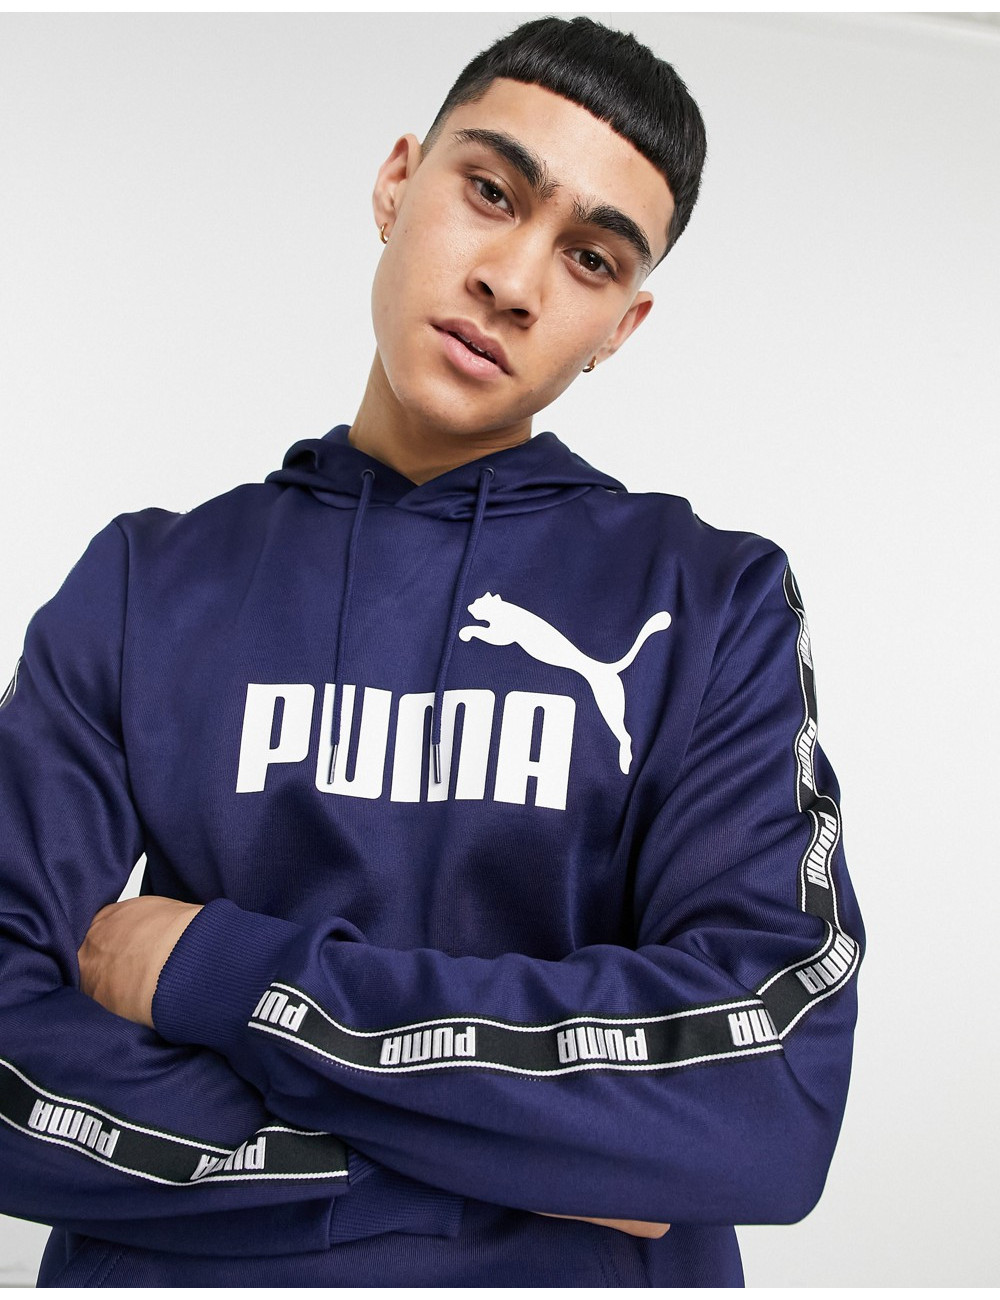 Puma tape poly hoodie in navy